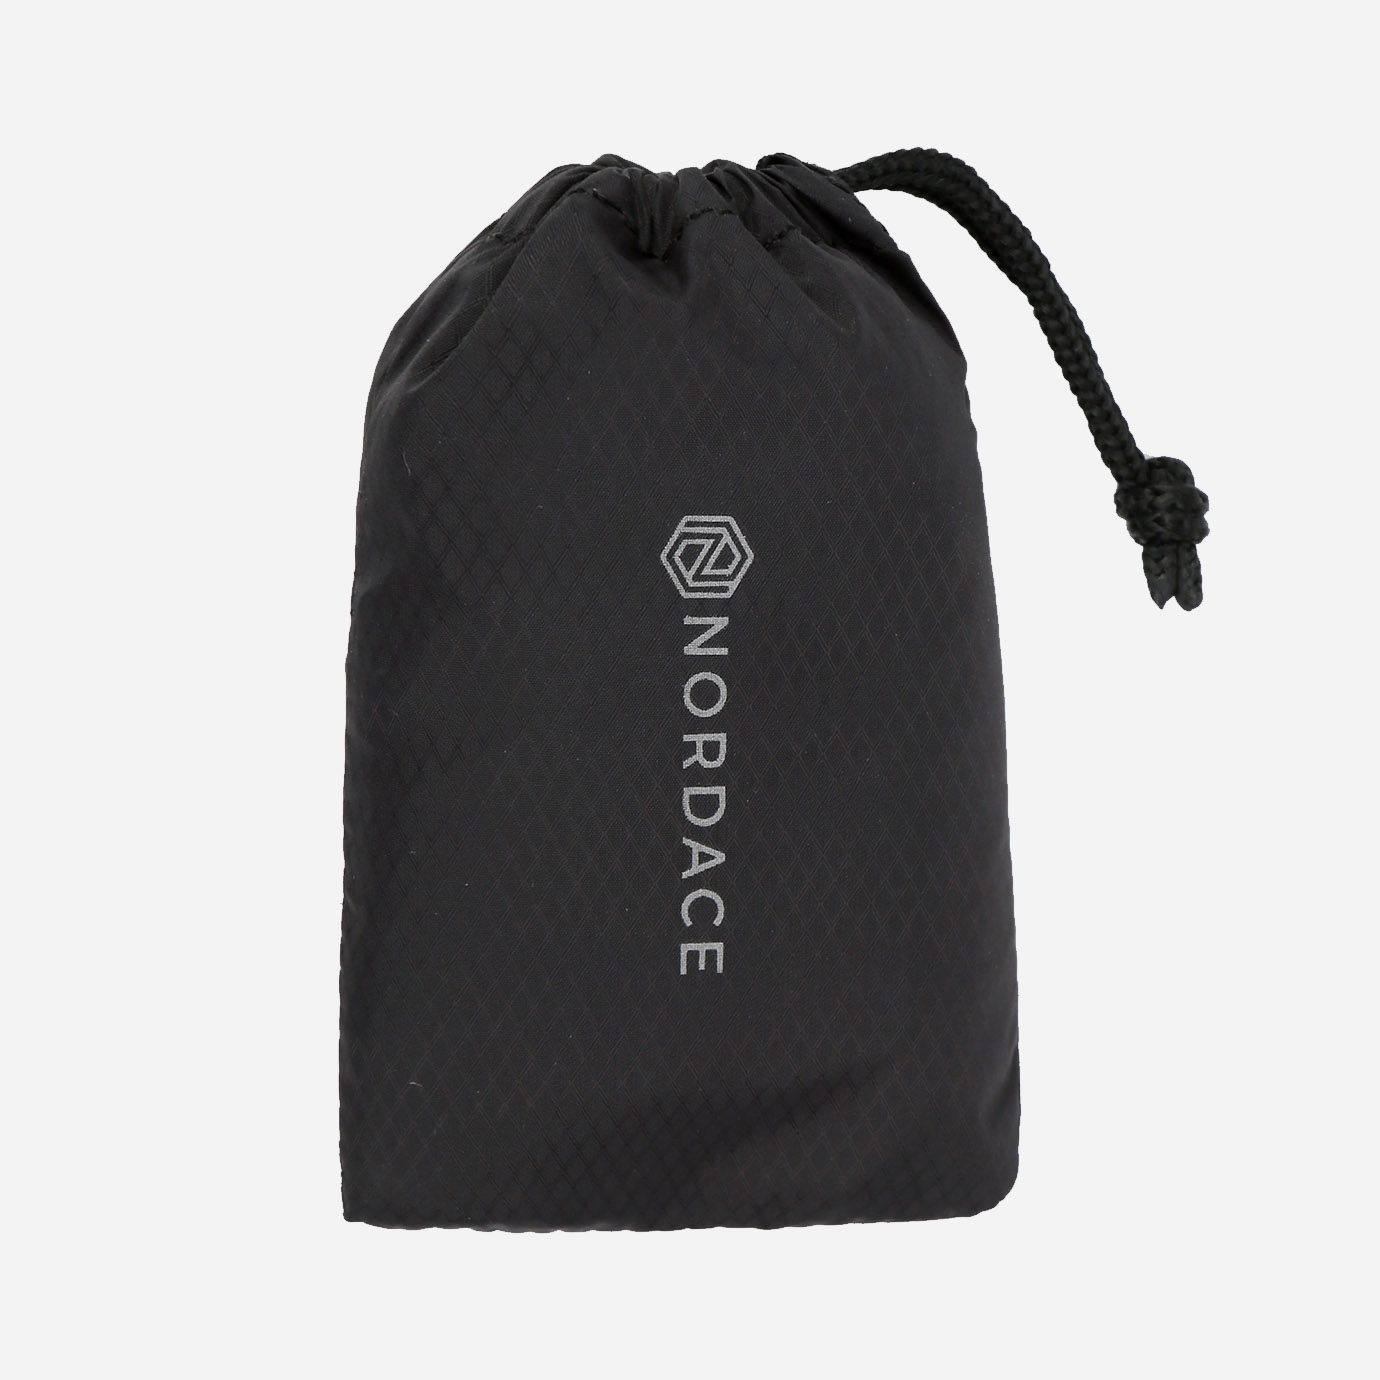 Nordace Reusable Shopping Bag - Foldable